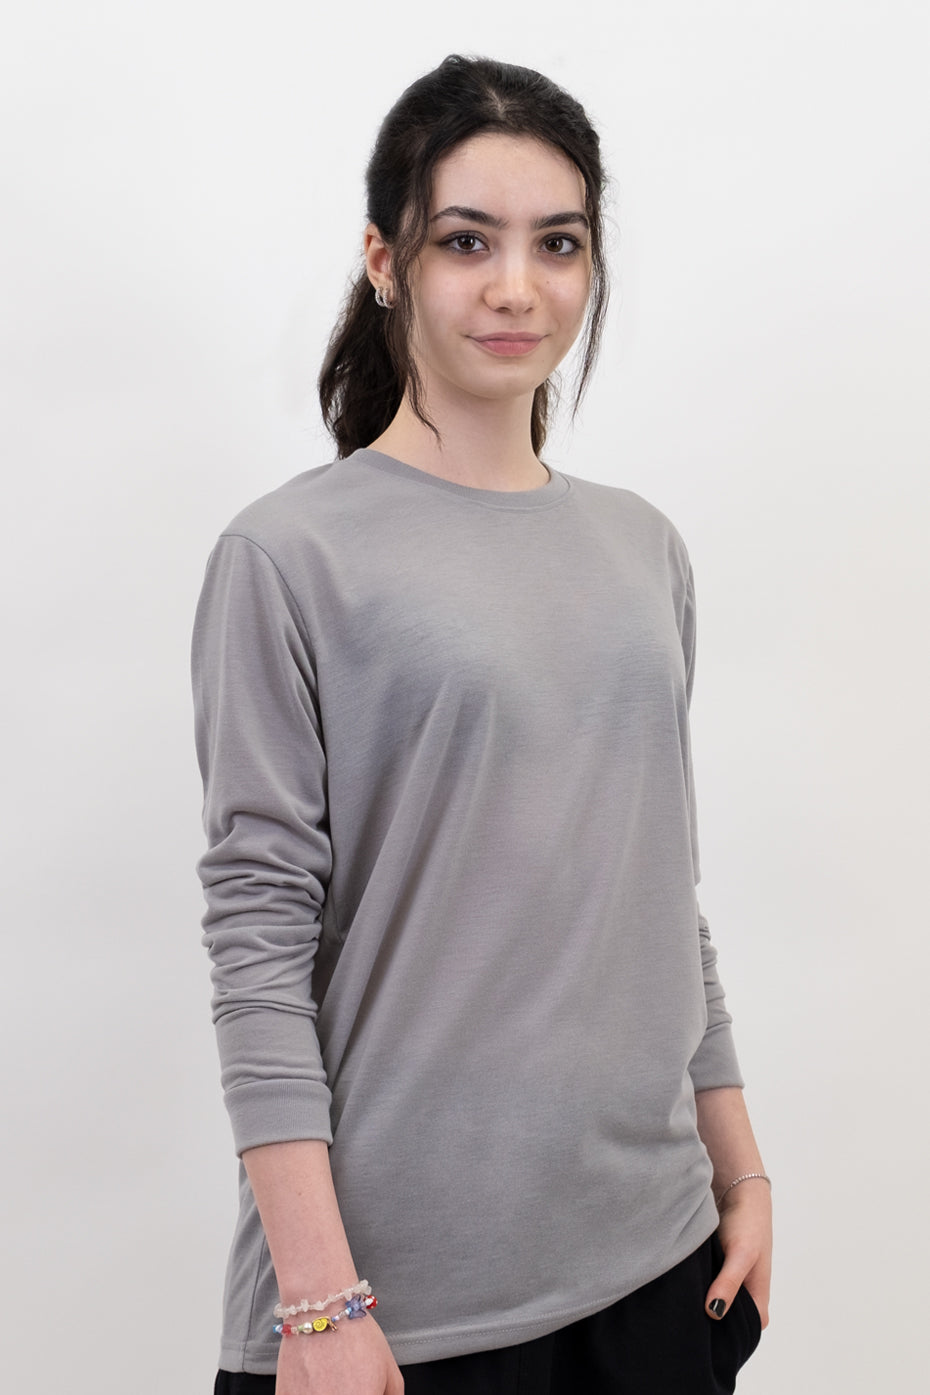 Long Sleeve T-Shirt Blank (YOUTH) for Custom Transfer Application XS S M L  XL